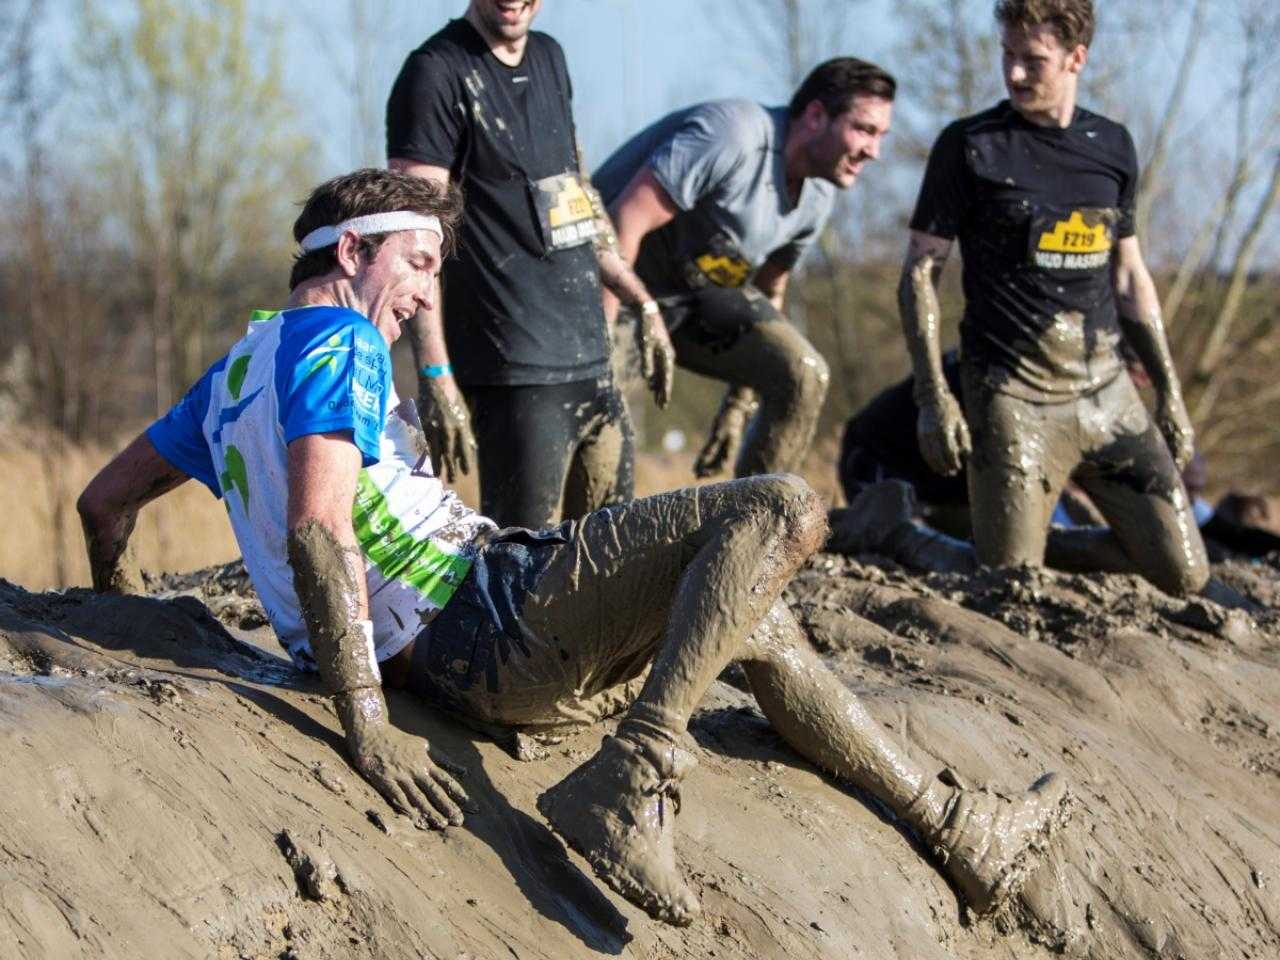 Participants at Mud Masters at sloping slope with mud